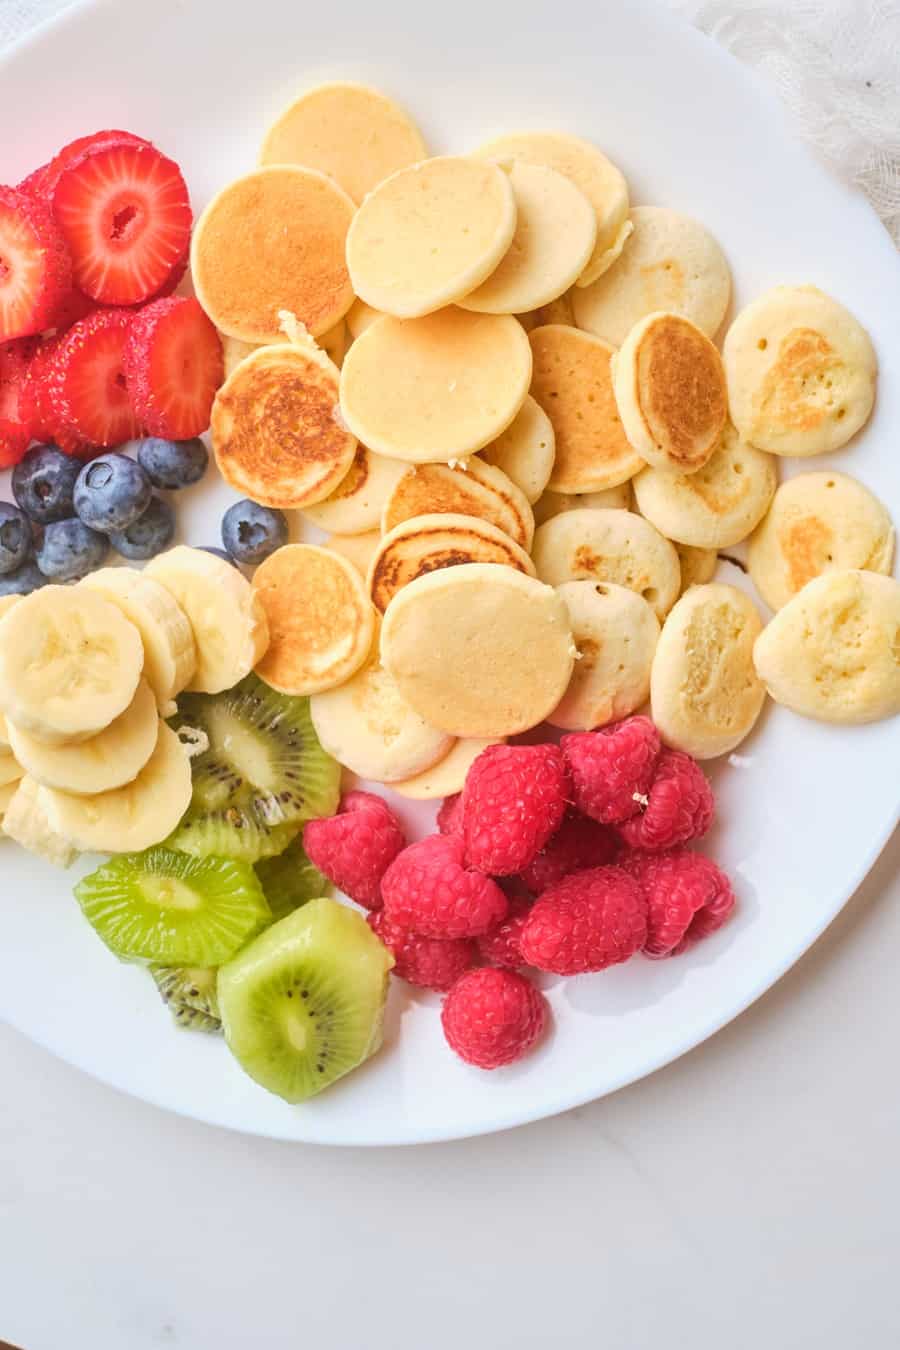 Mini pancakes and fruit